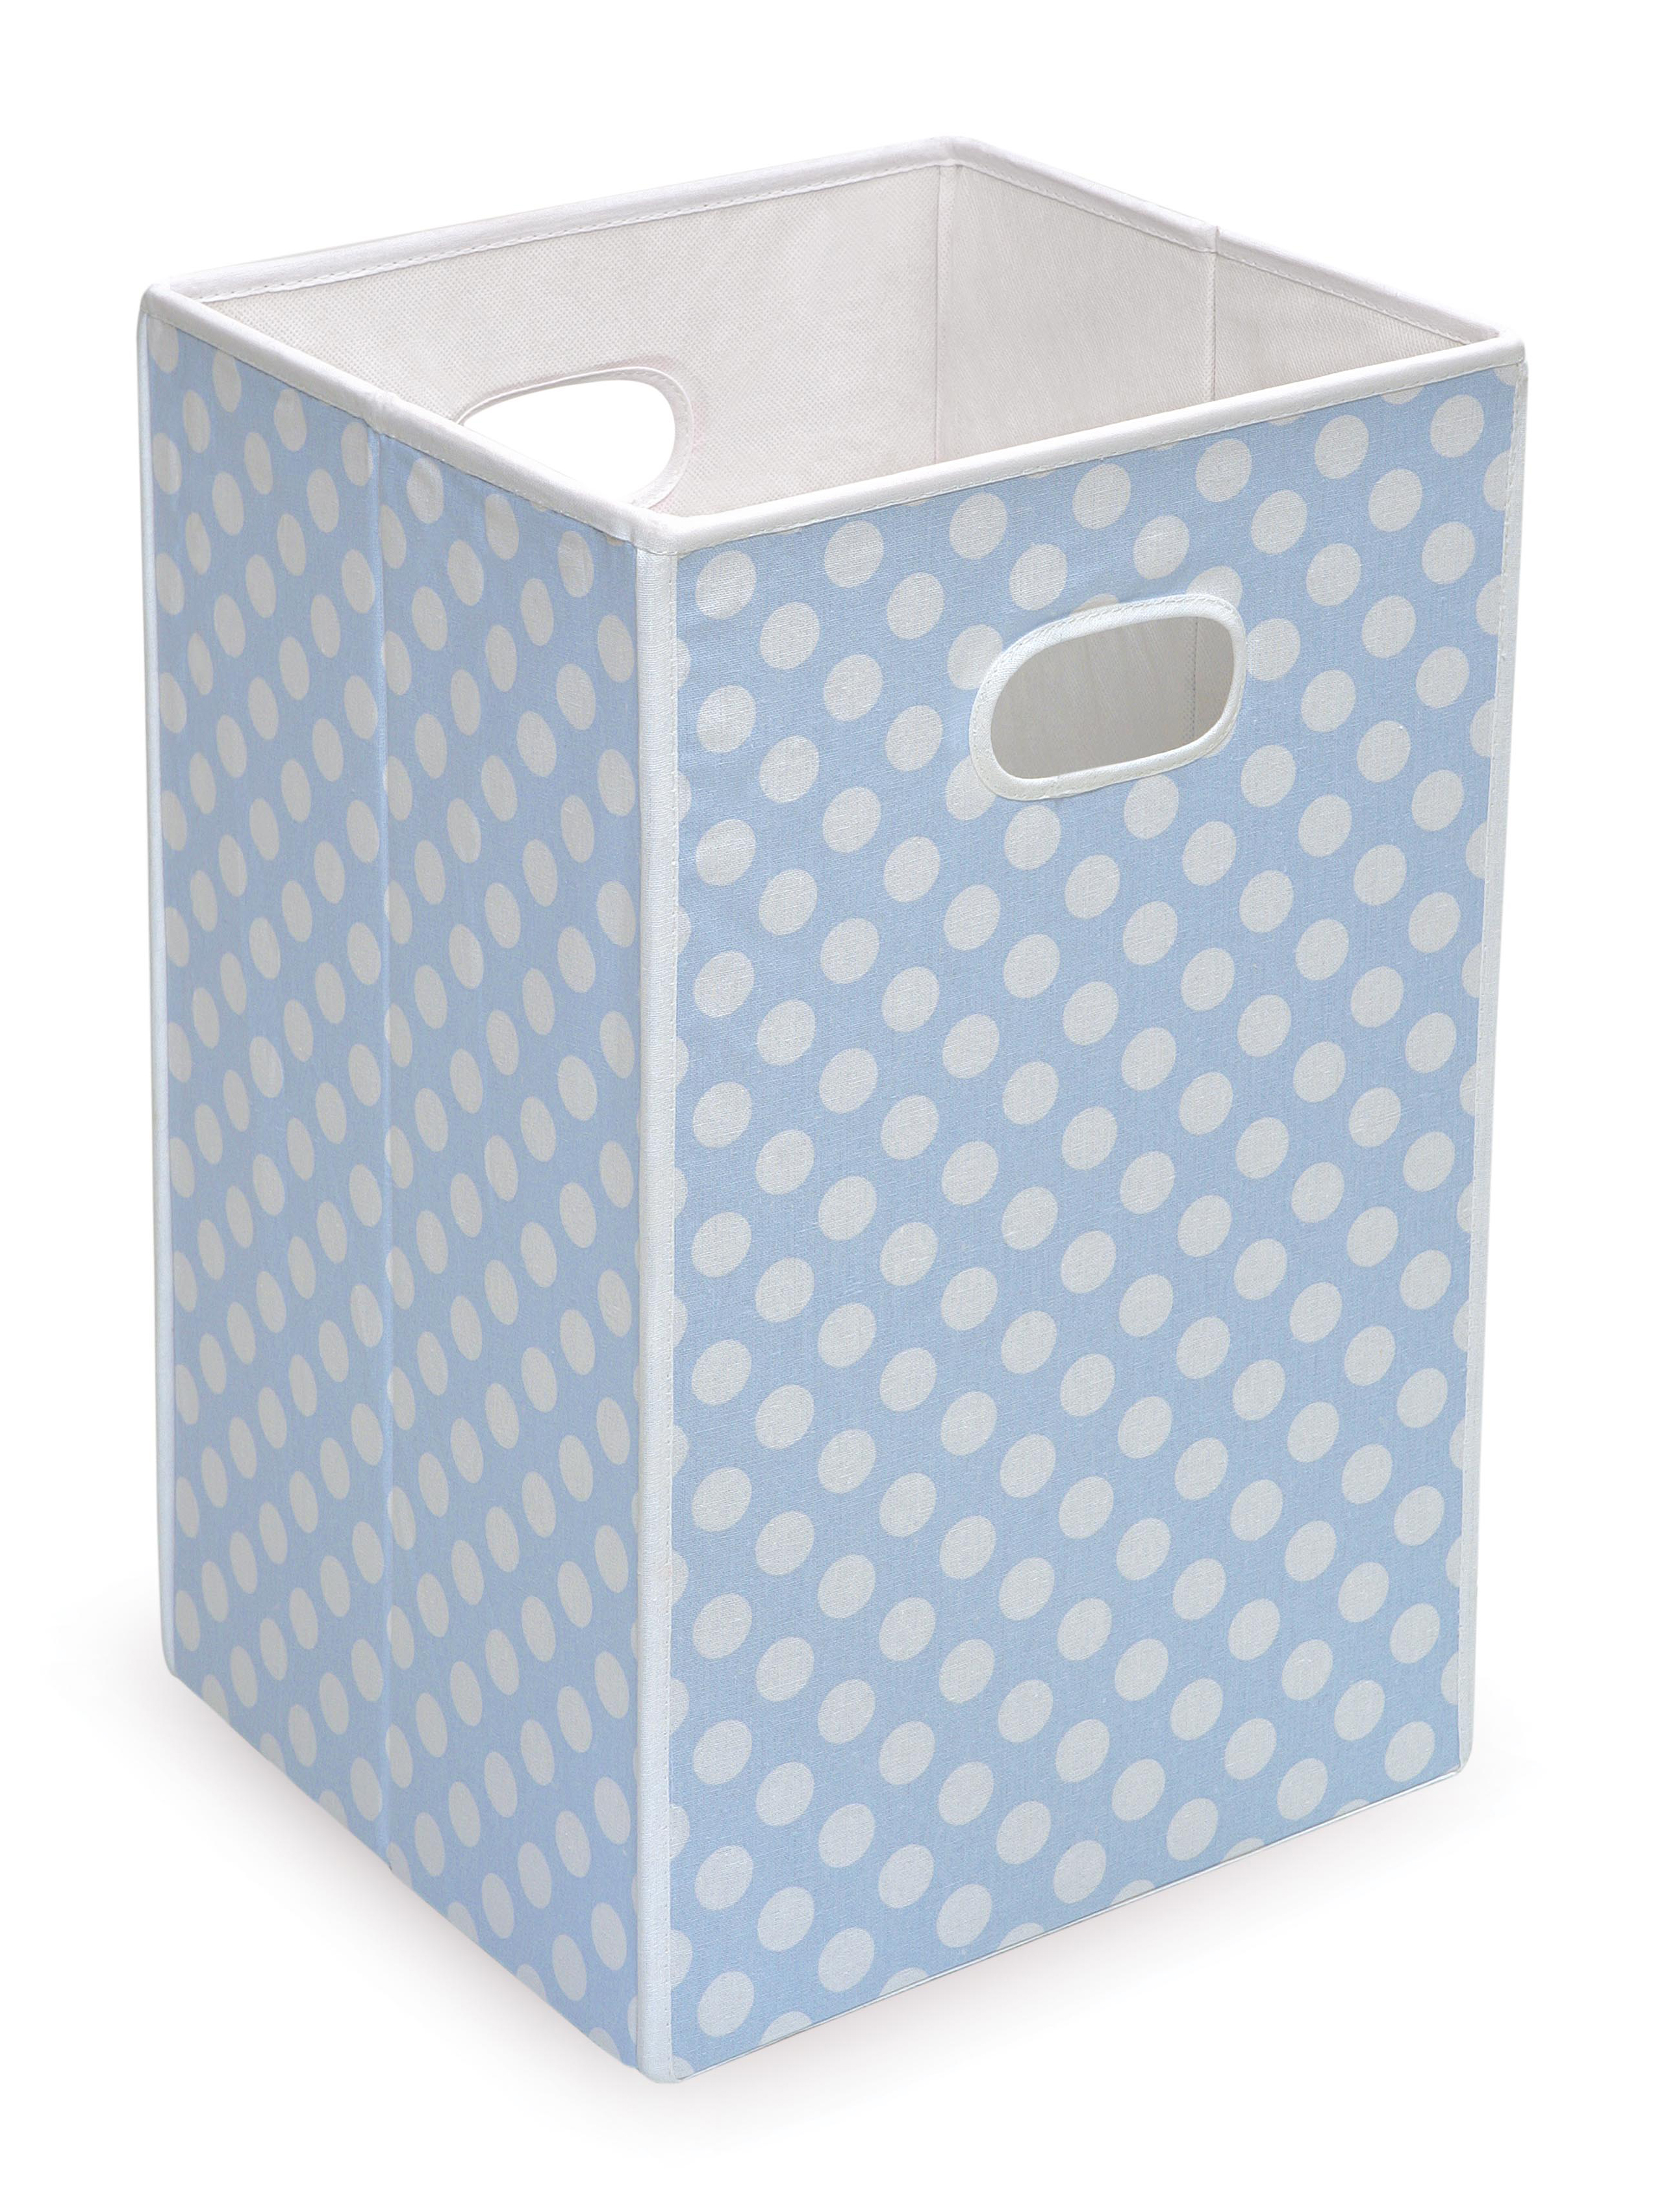 Folding Hamper/Storage Bin - Blue with White Polka Dots